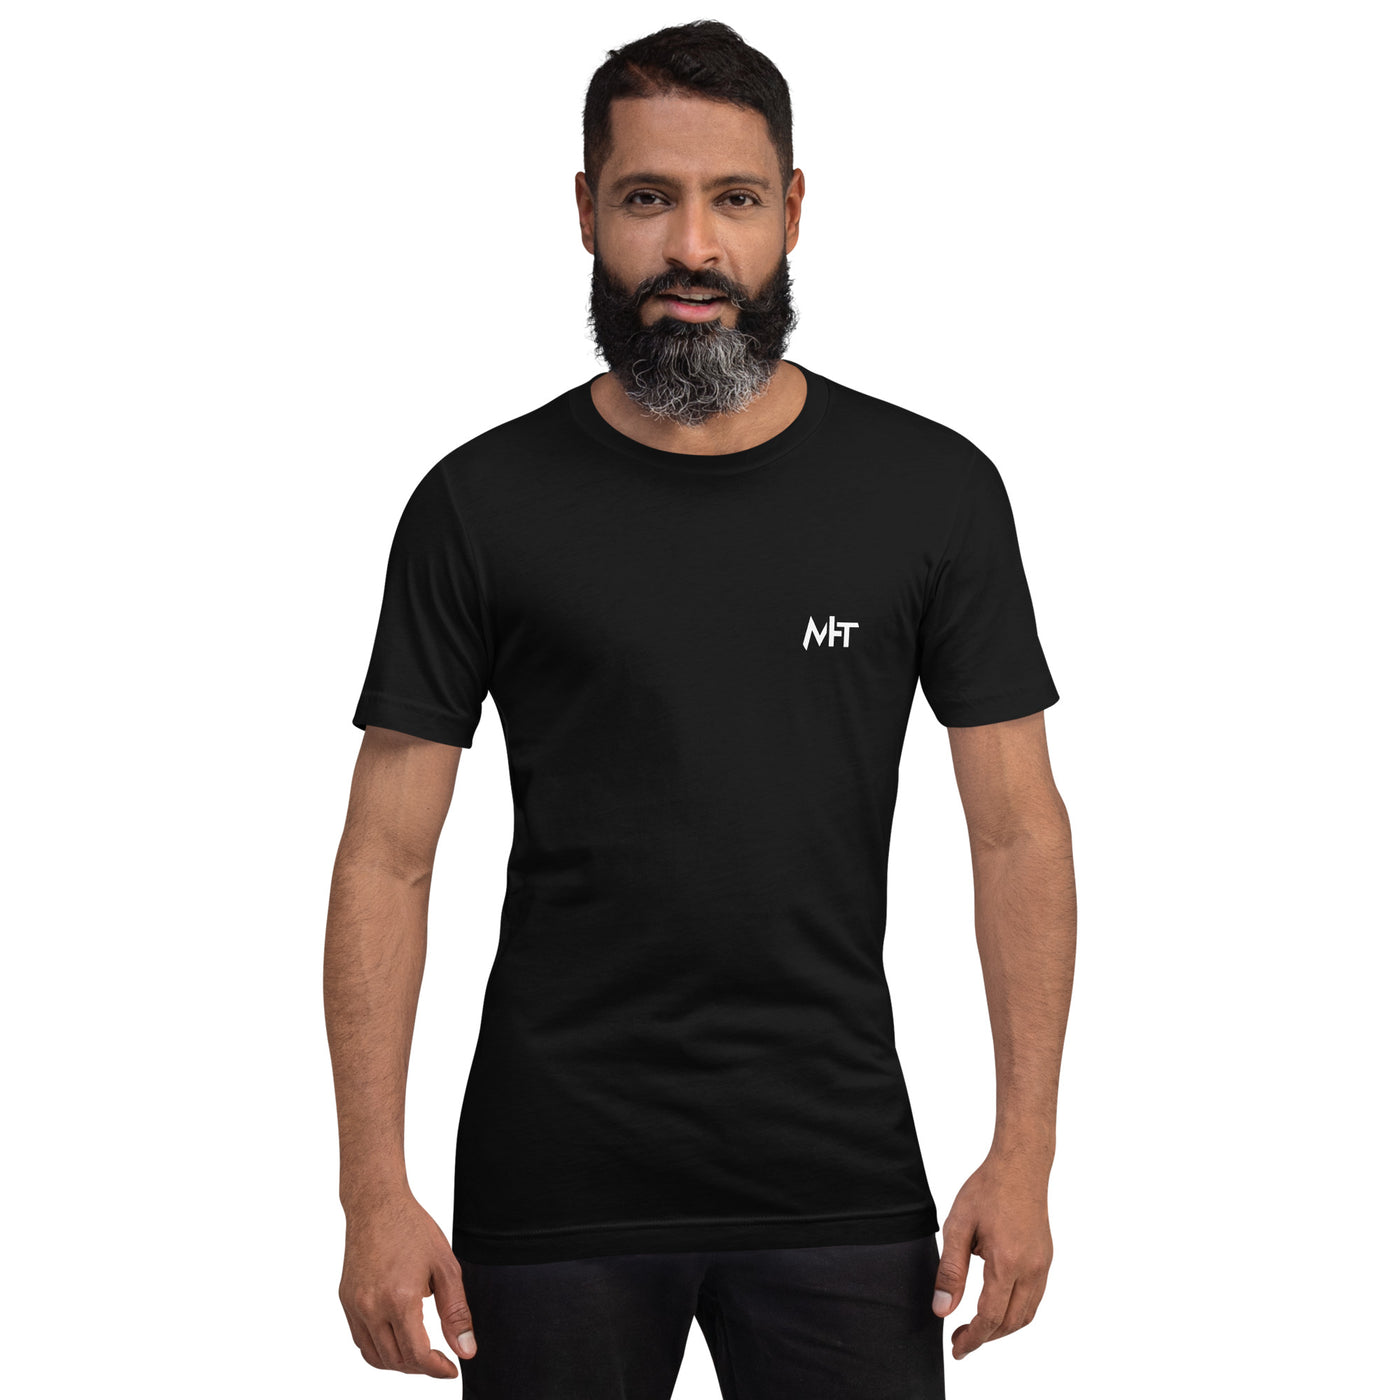 Eat sleep hack repeat v1 - Unisex t-shirt (back print)